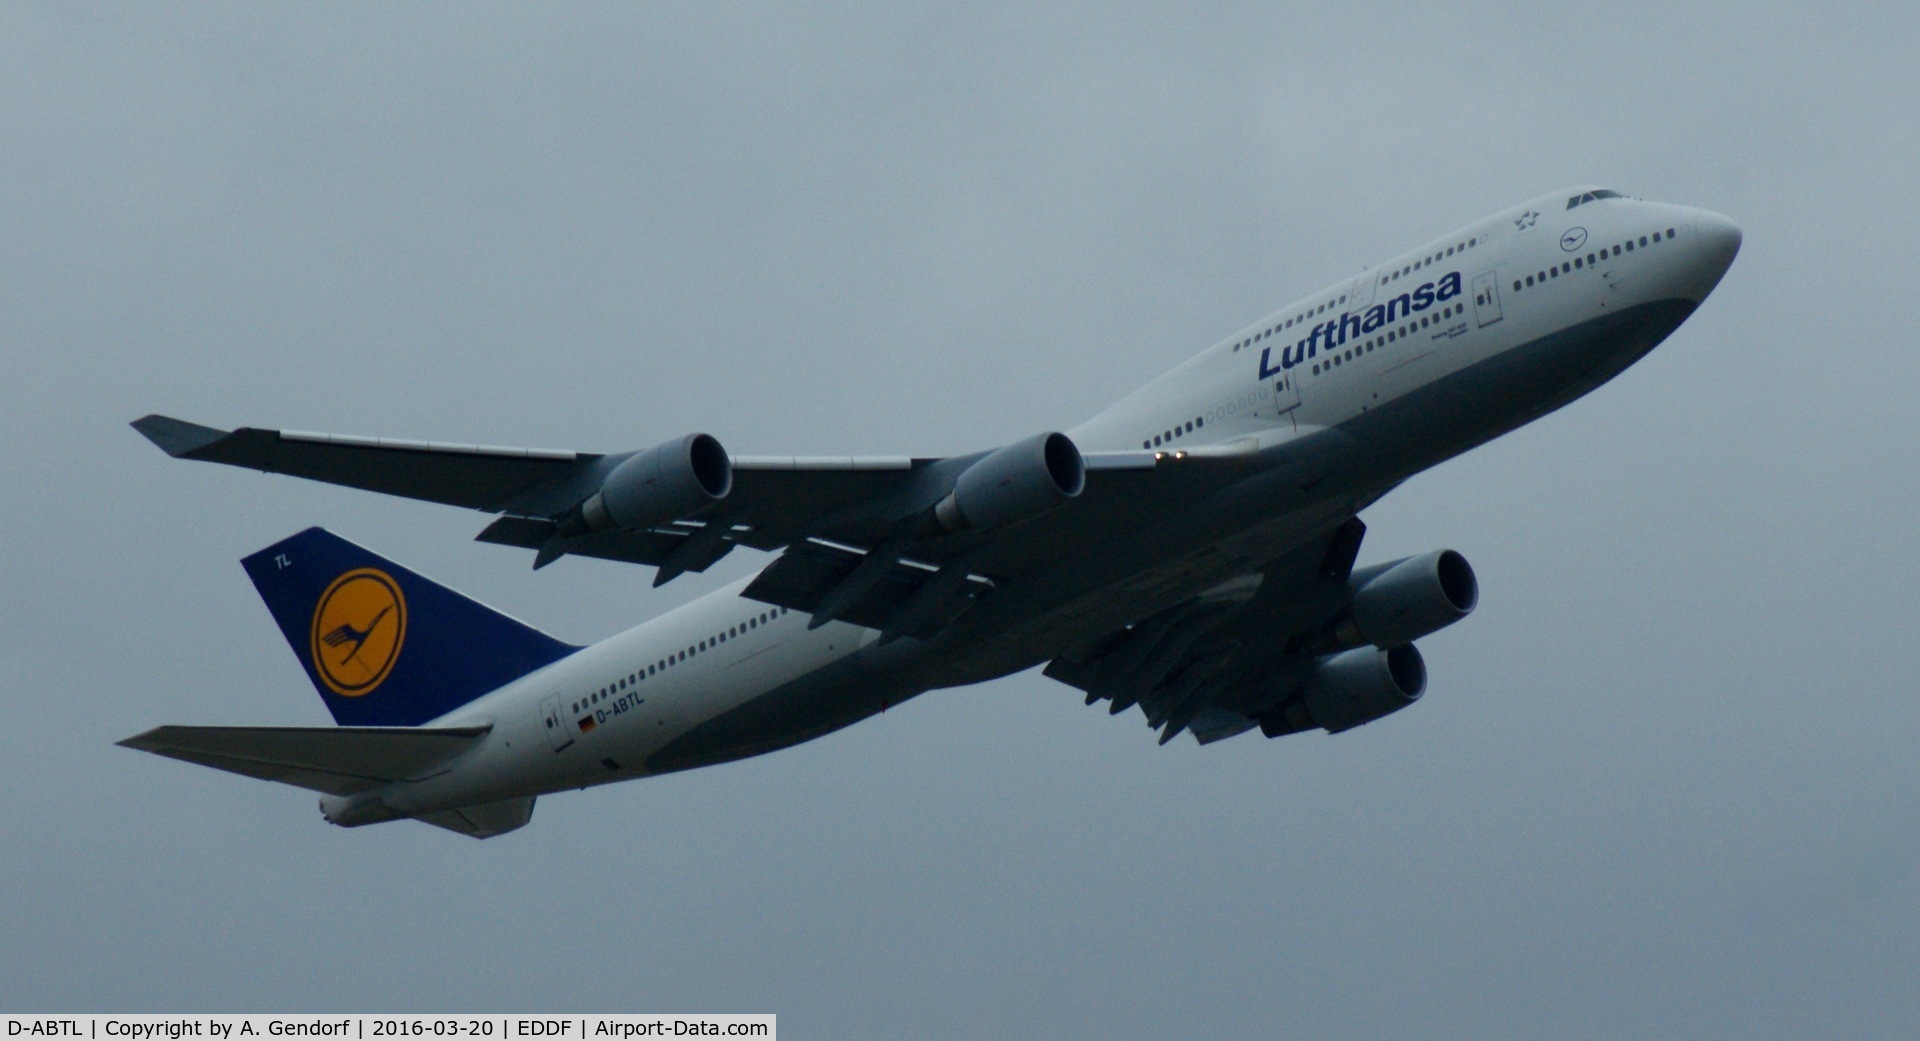 D-ABTL, 2002 Boeing 747-430 C/N 29872, Lufthansa, is here departing at Frankfurt Rhein/Main(EDDF)